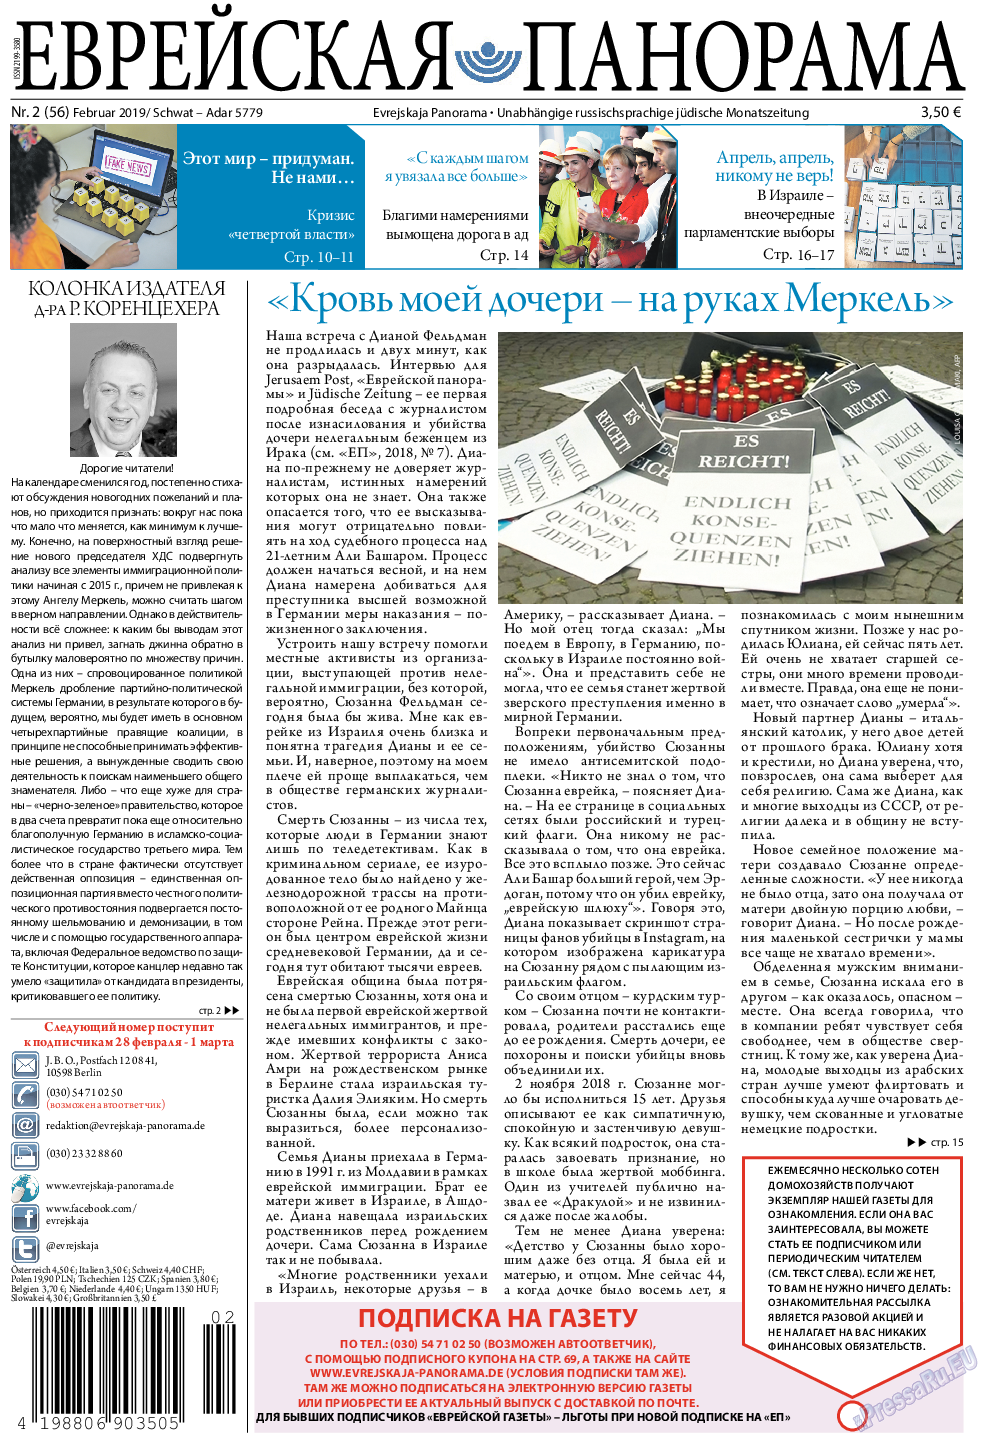 Еврейская панорама, газета. 2019 №2 стр.1